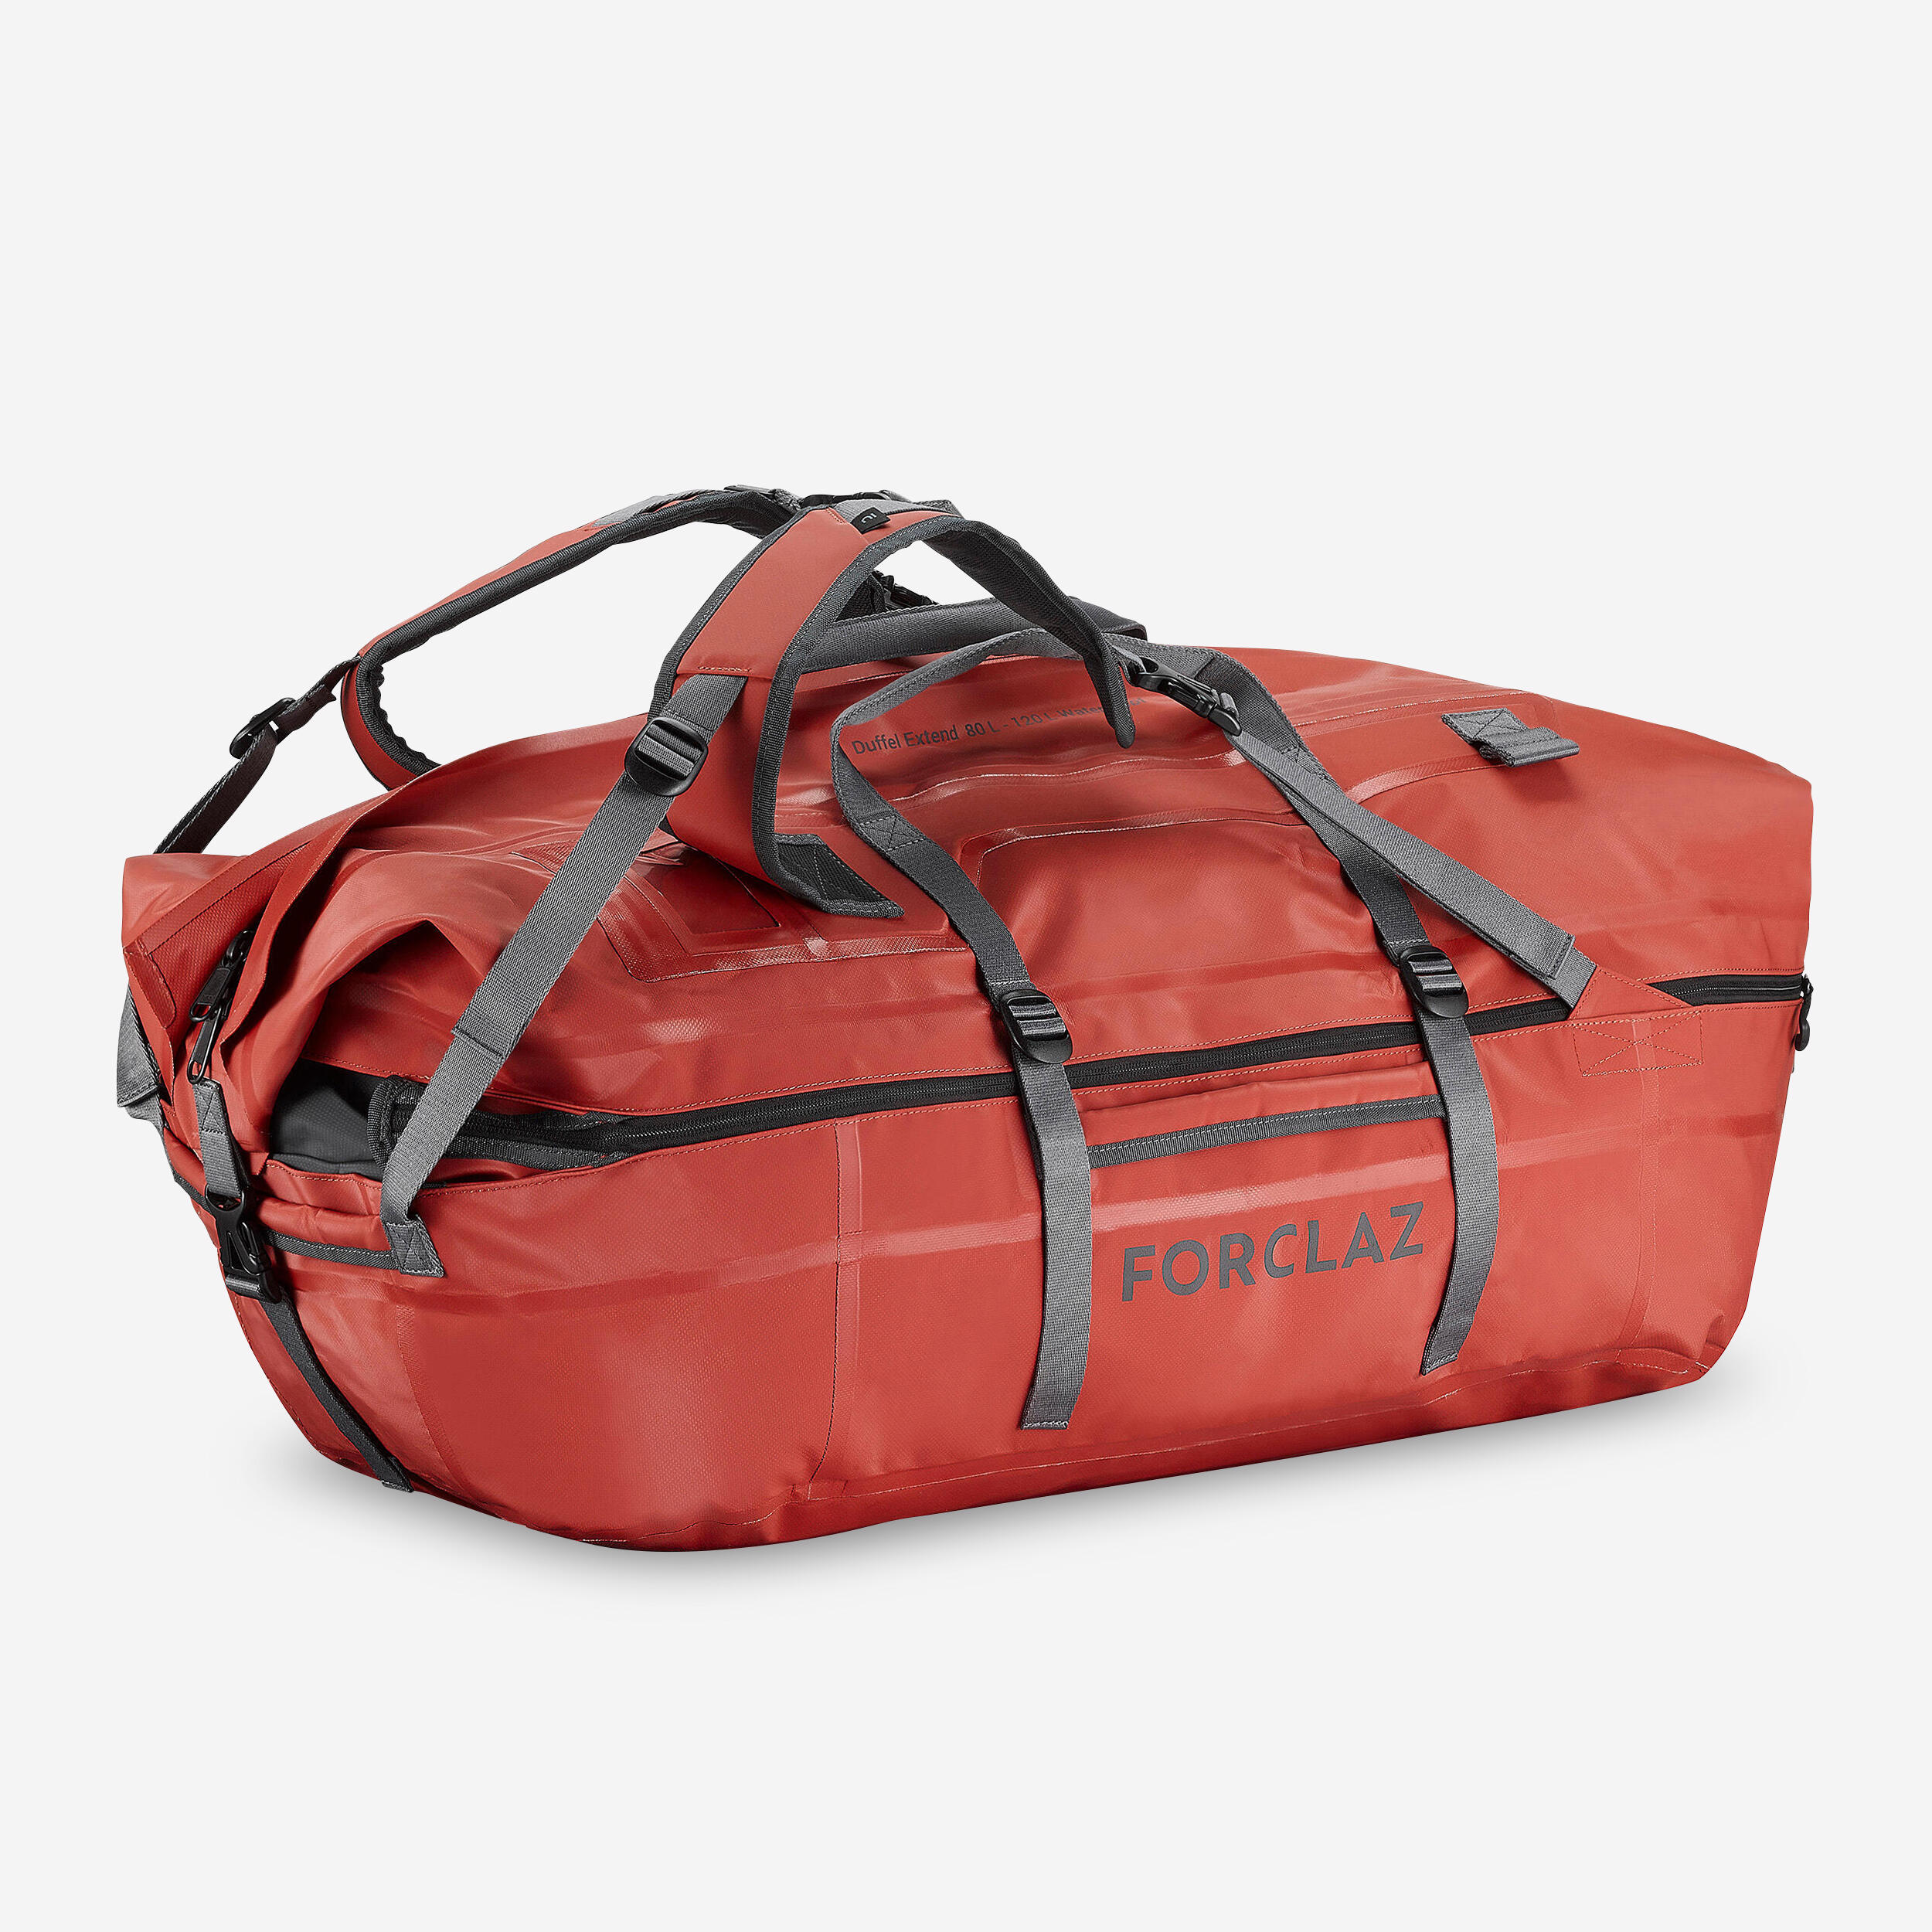 FORCLAZ Waterproof Trekking Carry Bag - 80 L to 120 L - DUFFEL 900 EXTEND WP